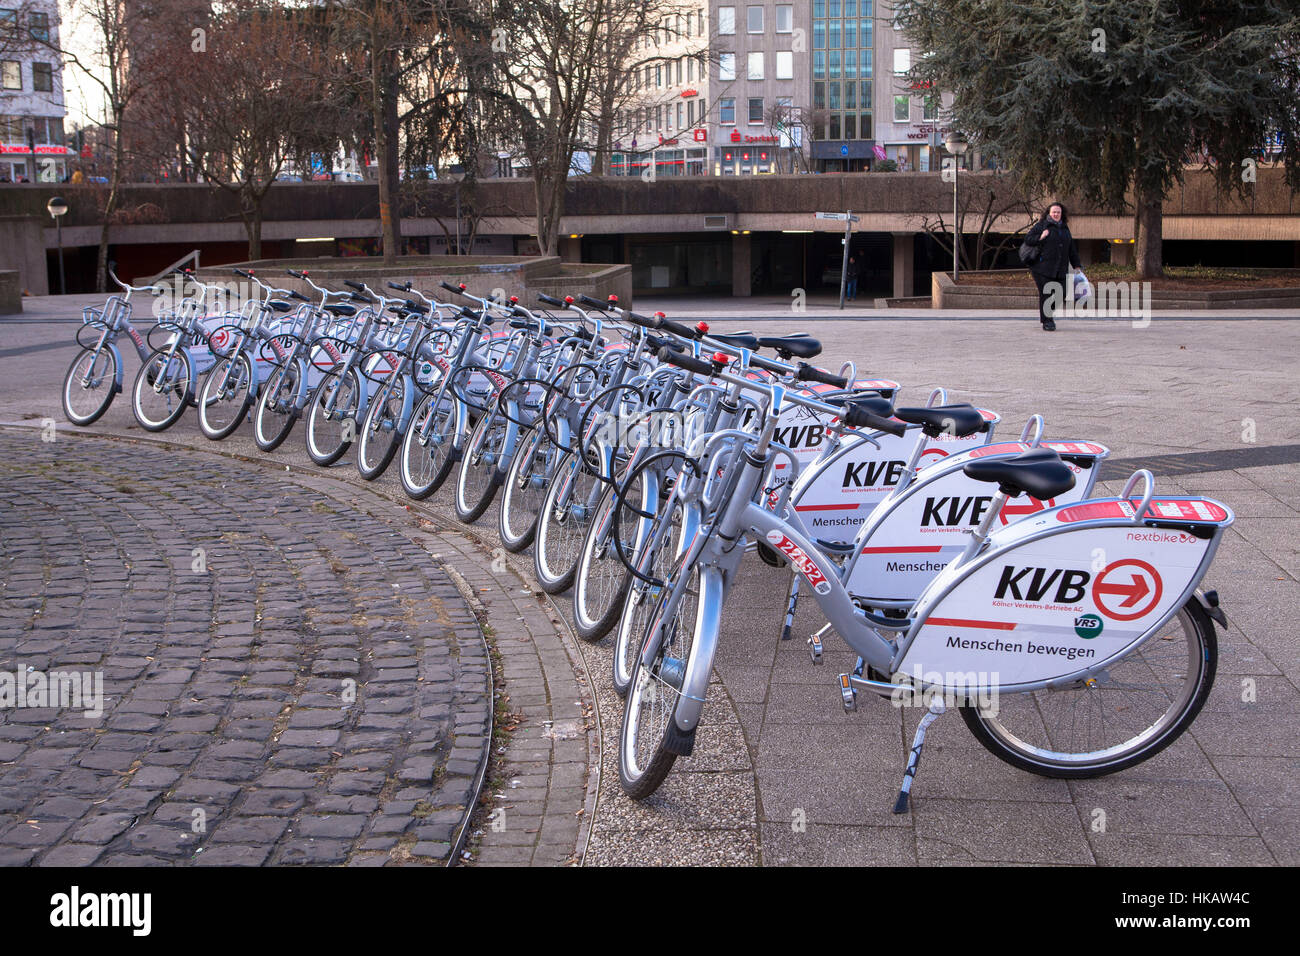 Germany, Cologne, rental bikes of the company Koelner Verkehrsbetriebe KVB (Cologne public transportation company) Stock Photo